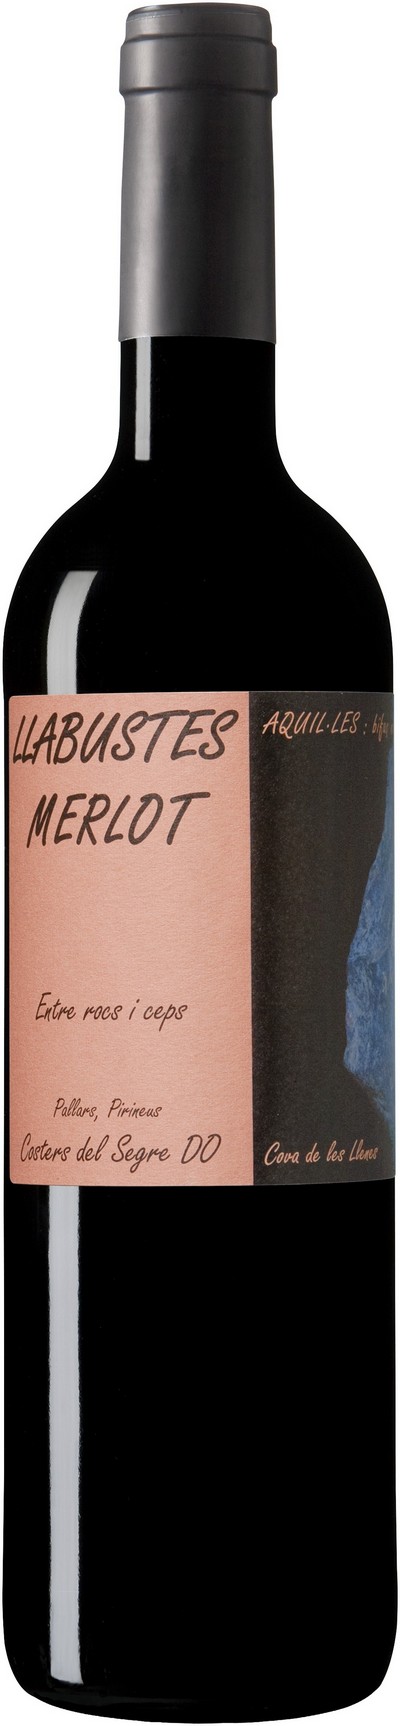 llabustes-merlot-2015